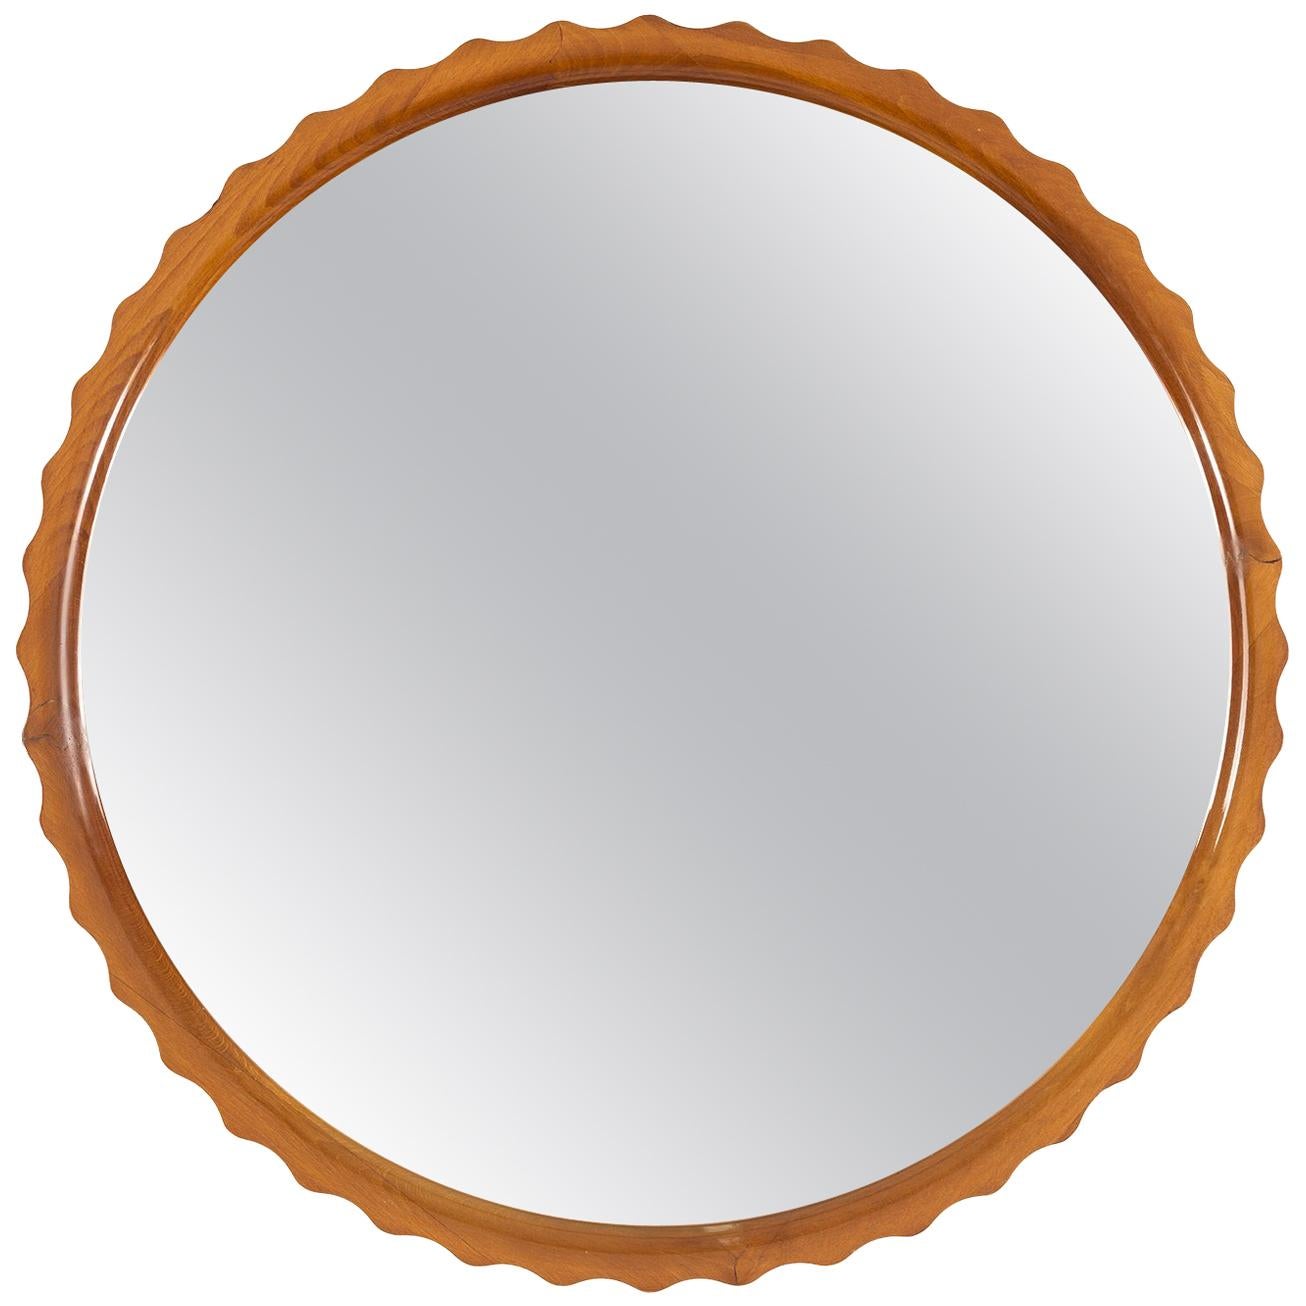 Scandinavian Modern Polished Solid Elmwood "Pie Crust" Mirror